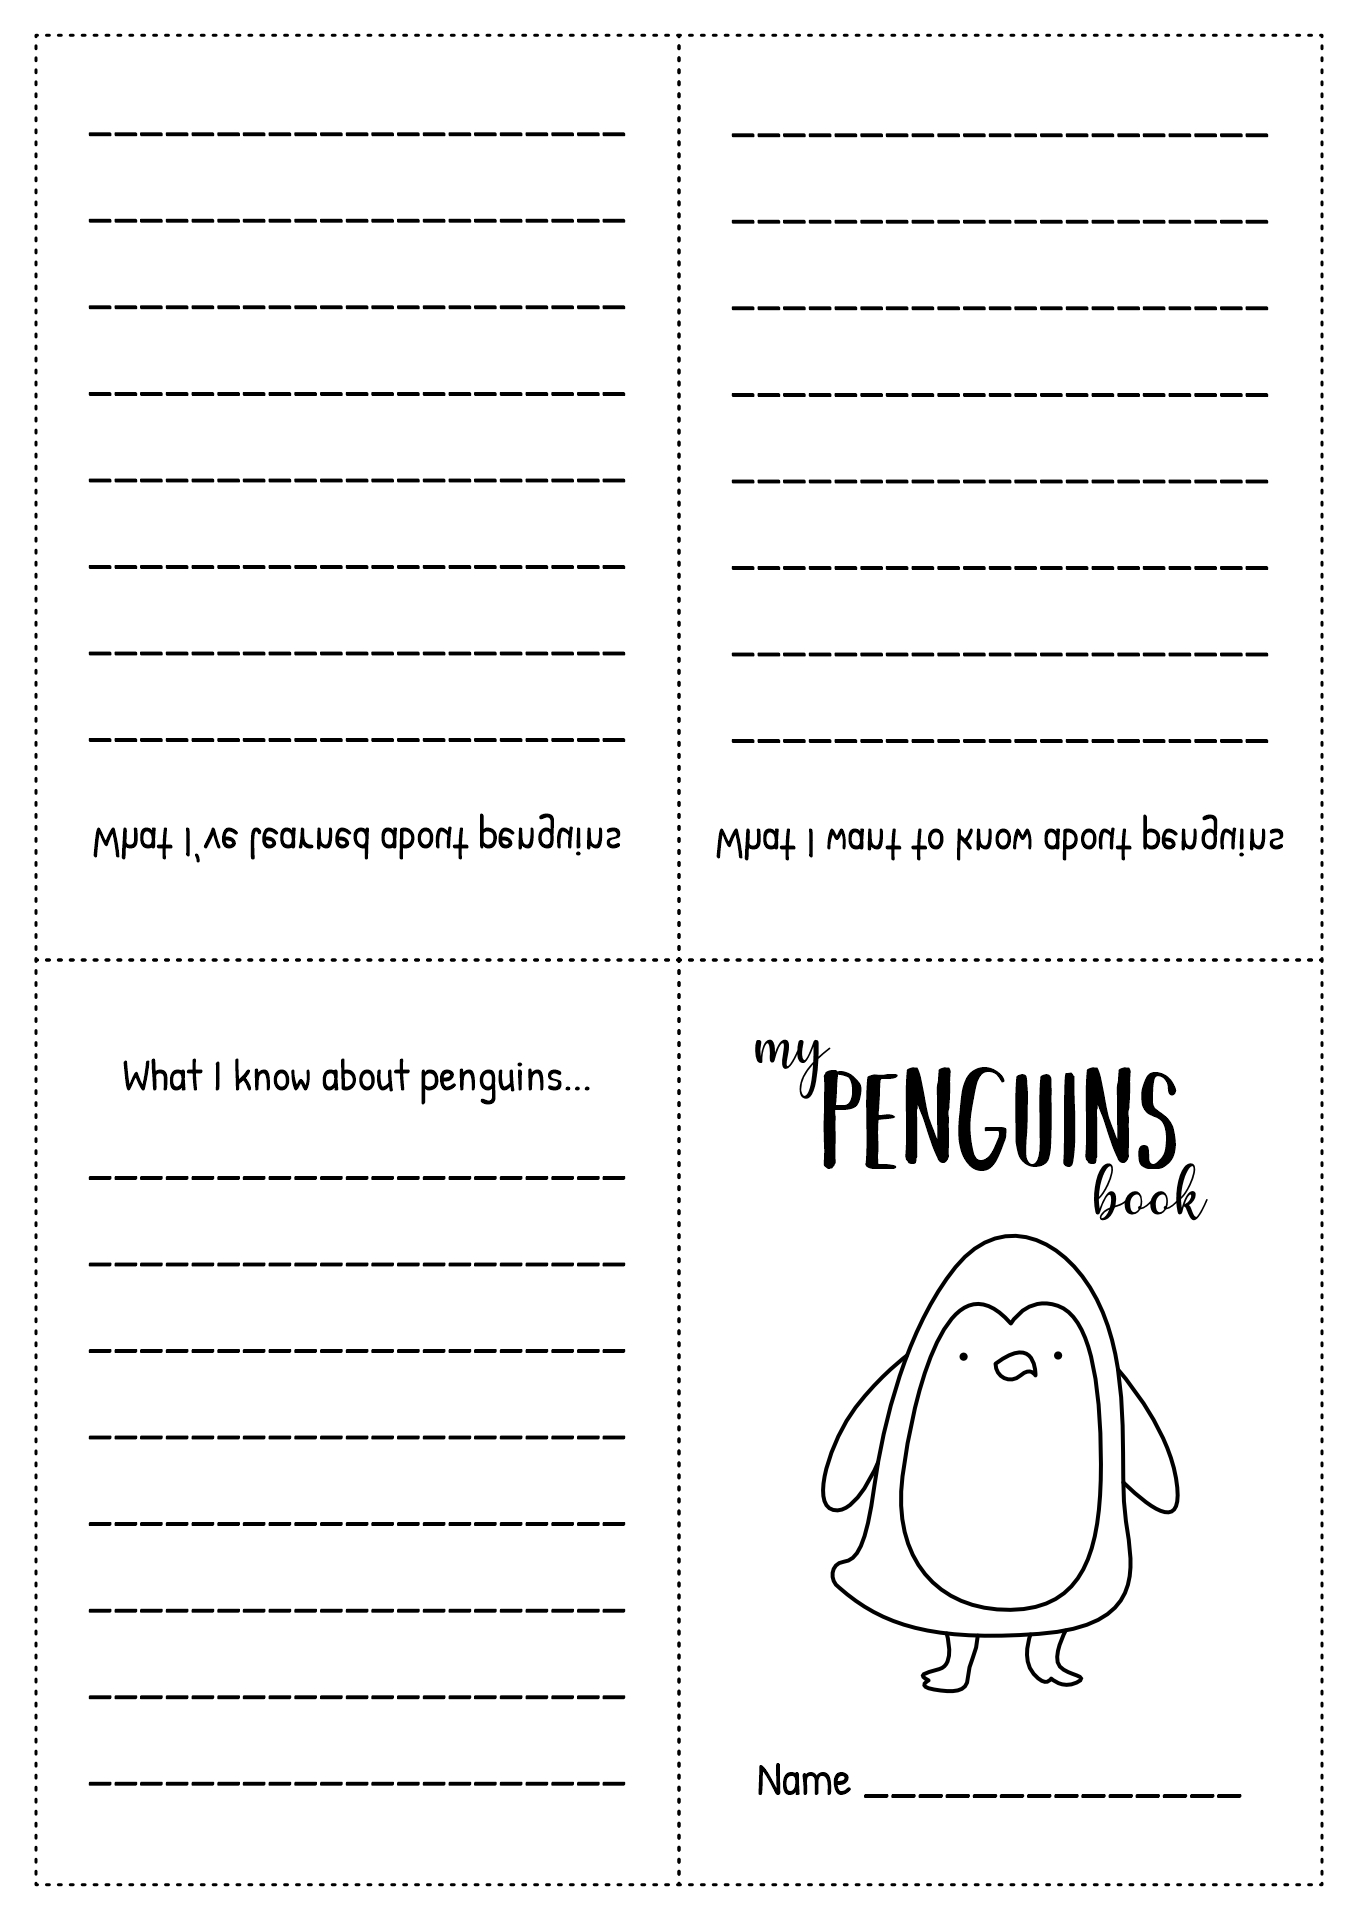 10 Best Images of Penguin Preschool Worksheets Penguin Parts, Penguin